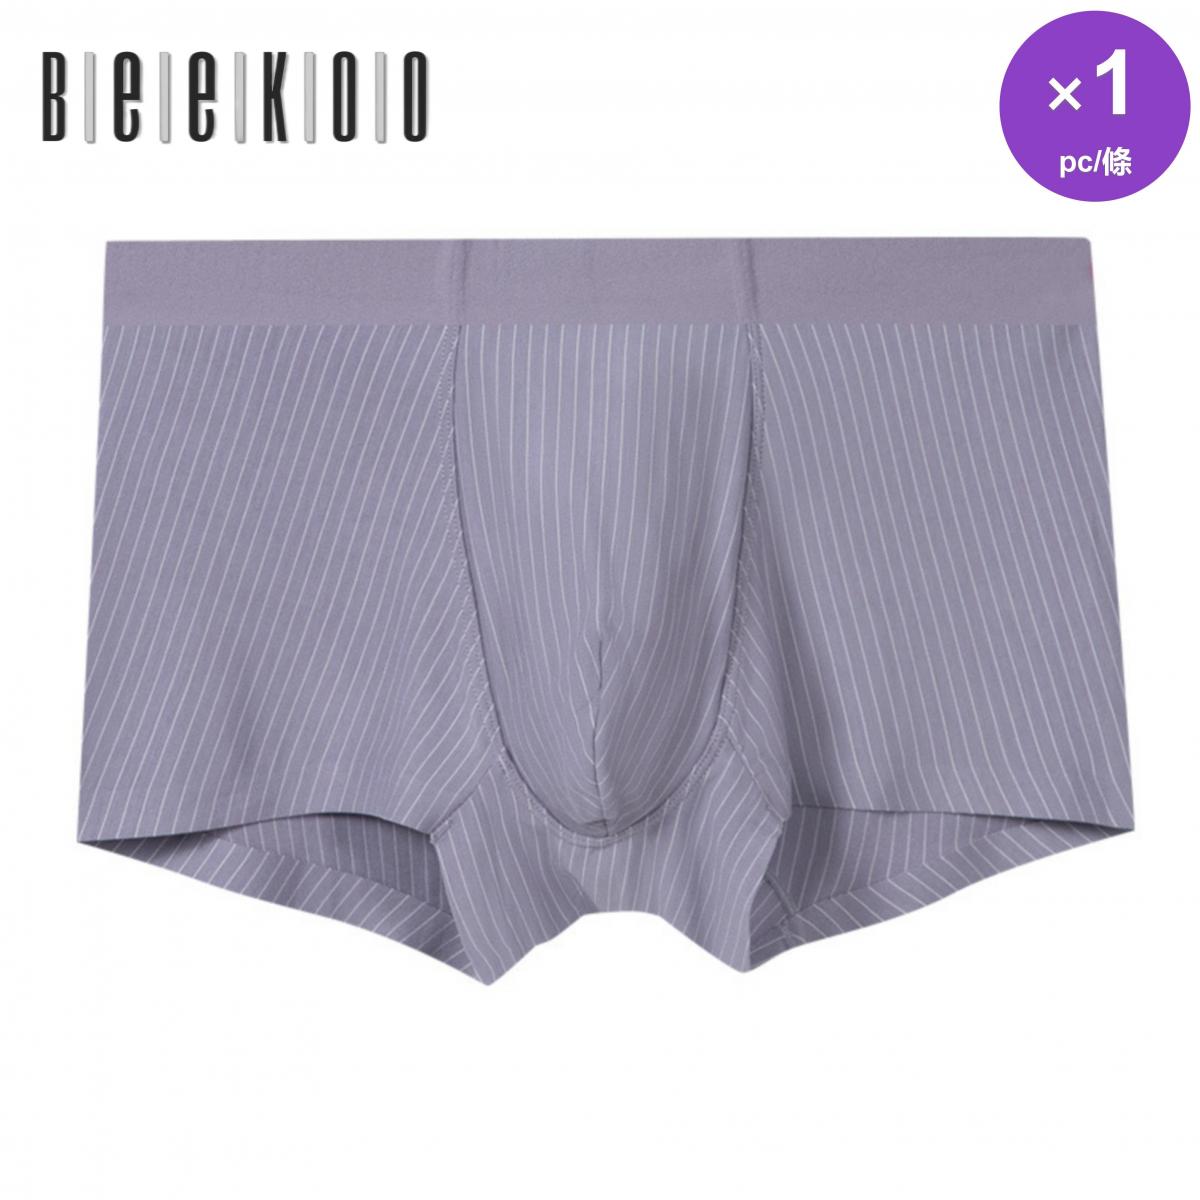 BEEKOO, [1 pack] Men's underwear Boxer Brief Graphene Tech Antibacterial  Austrian Lenzing Modal Super Cool, Color : Purple, Size : L